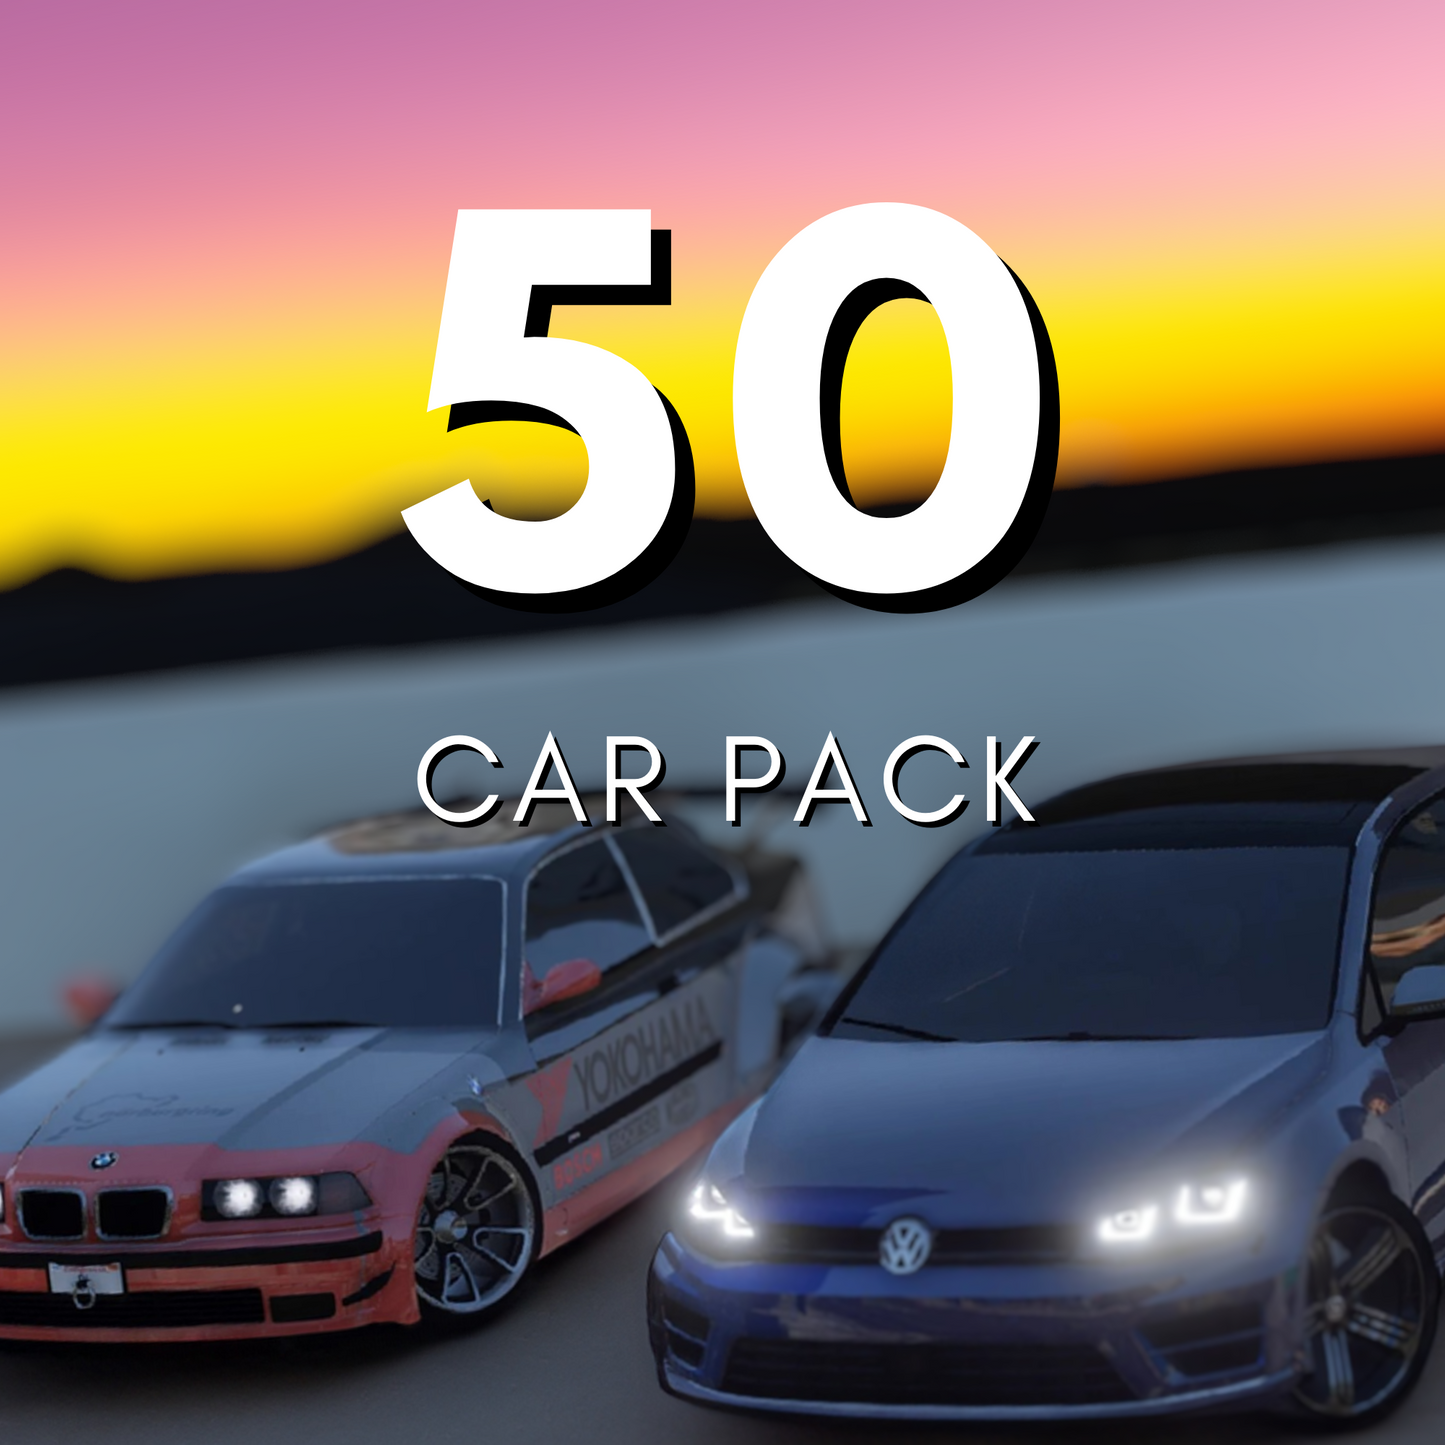 50 Car Pack